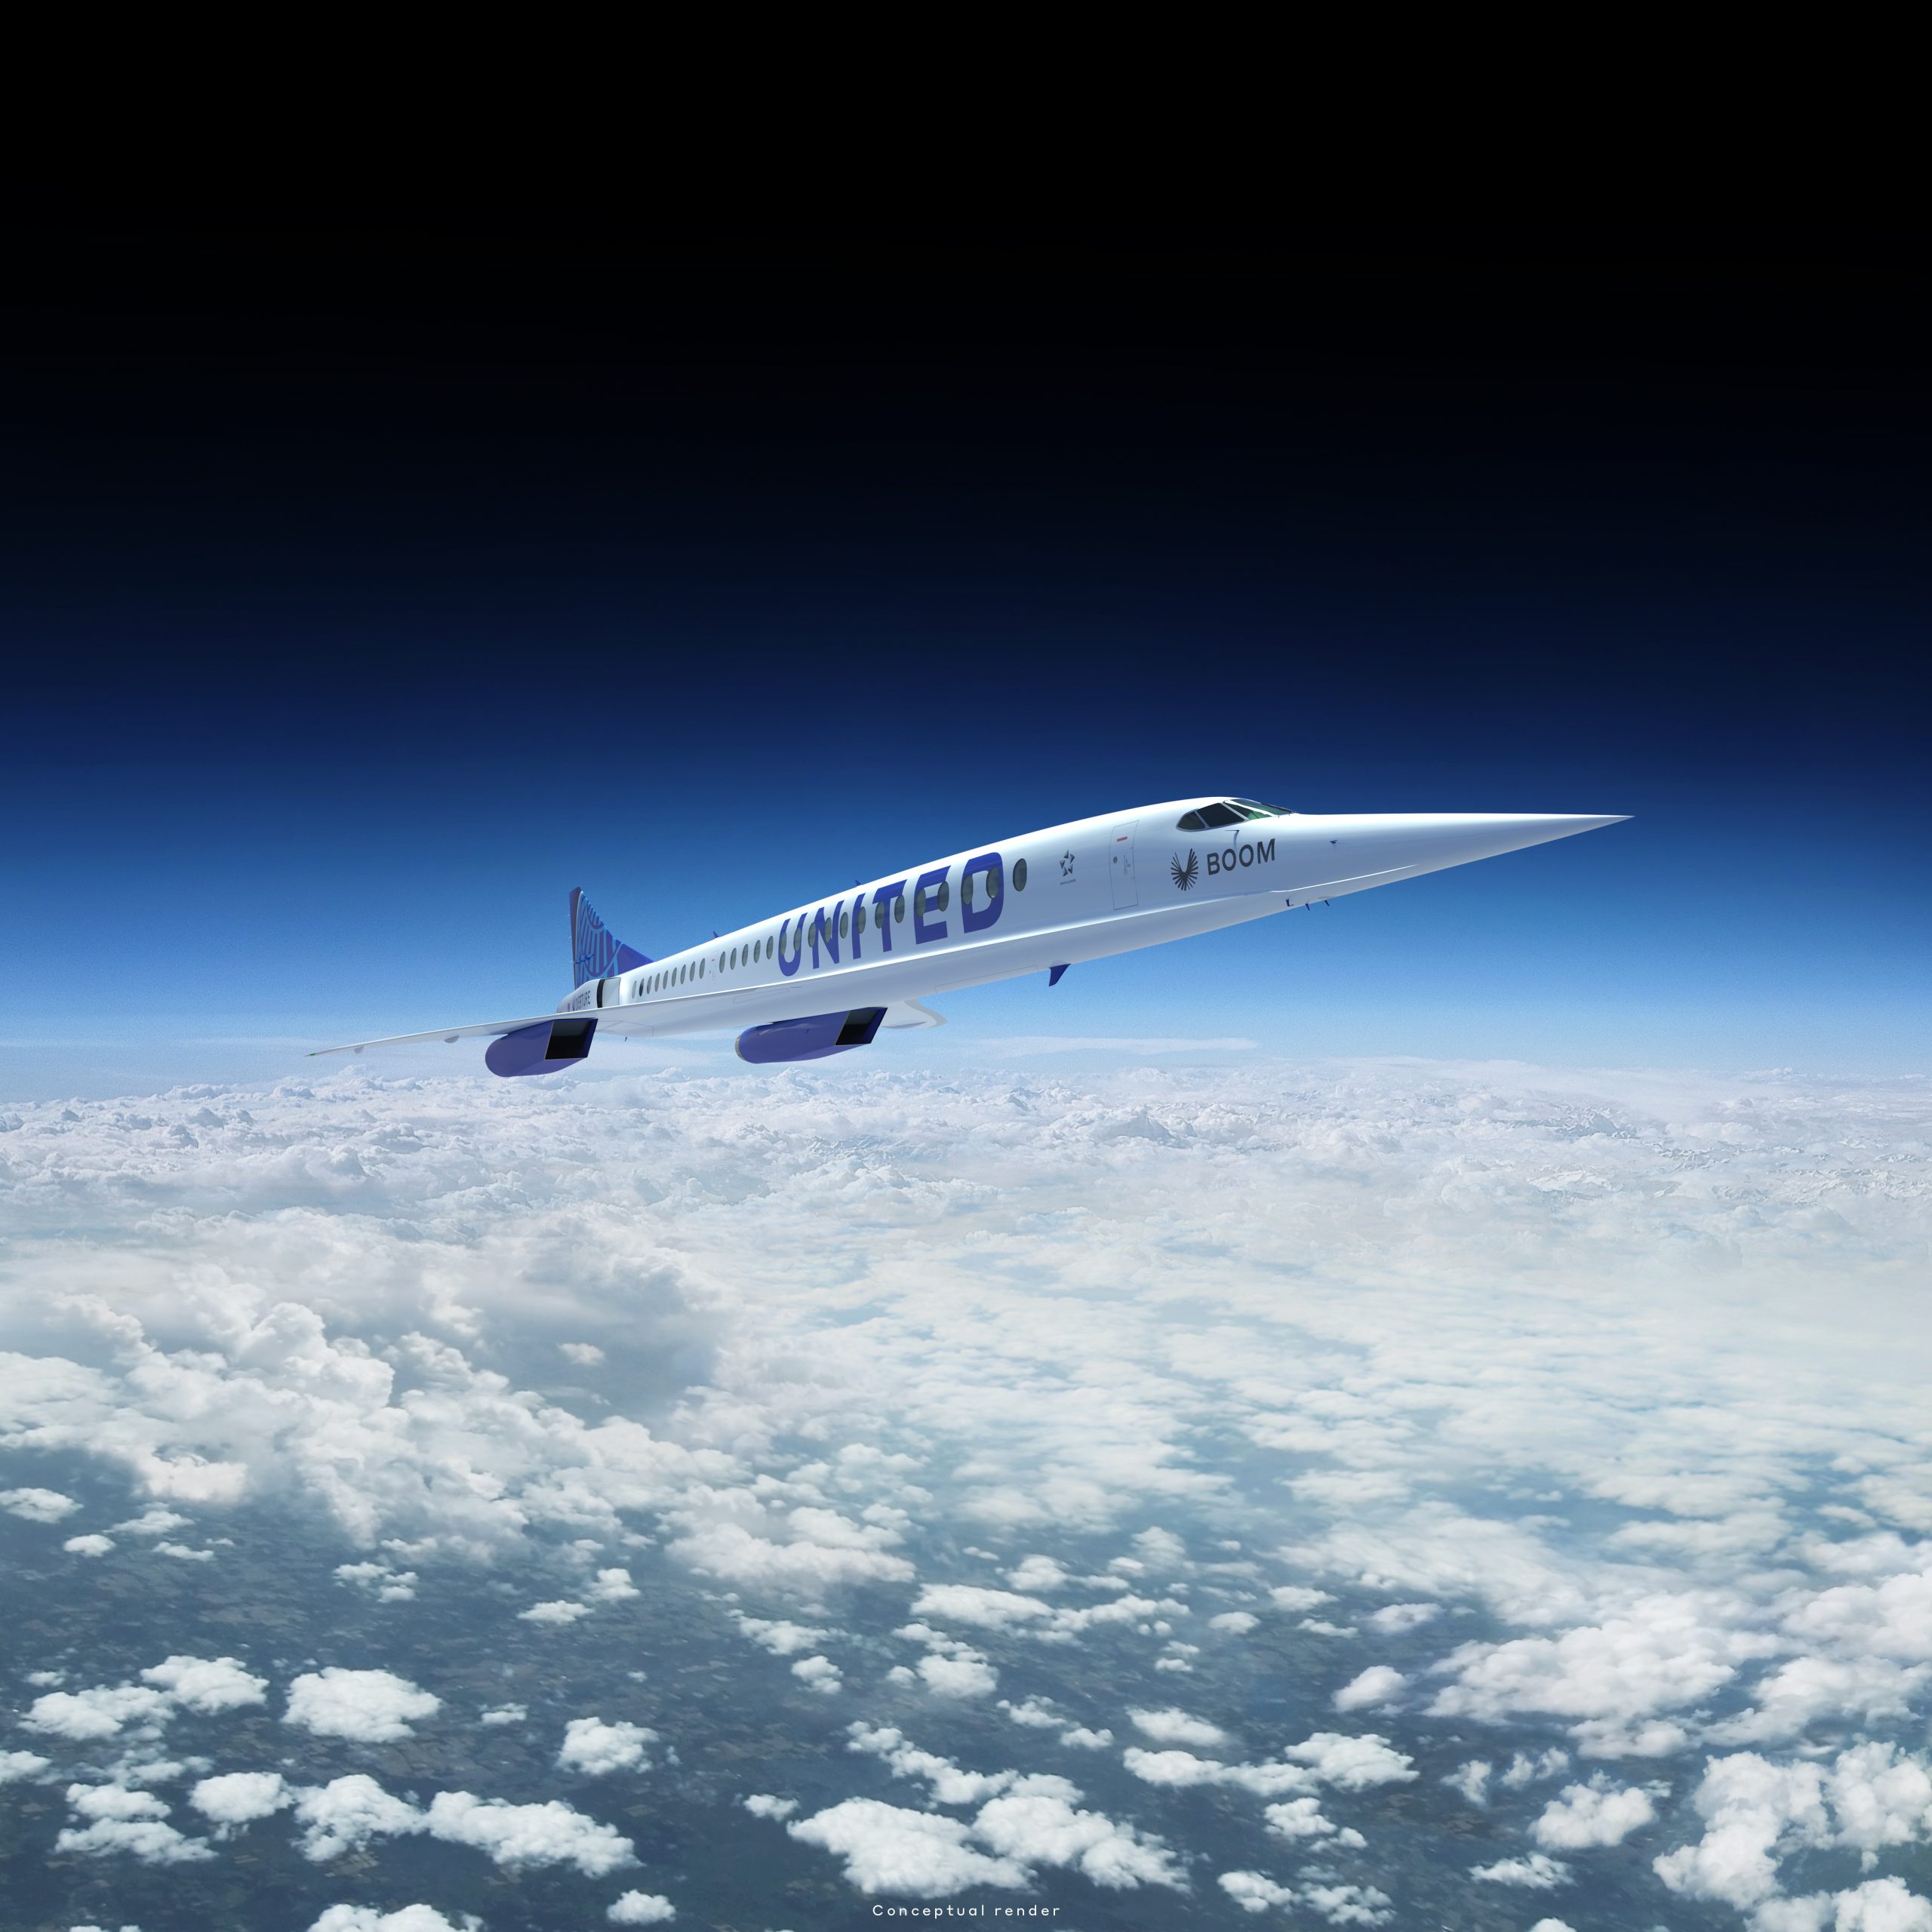 Boom aereo supersonico United Airlines - Overture